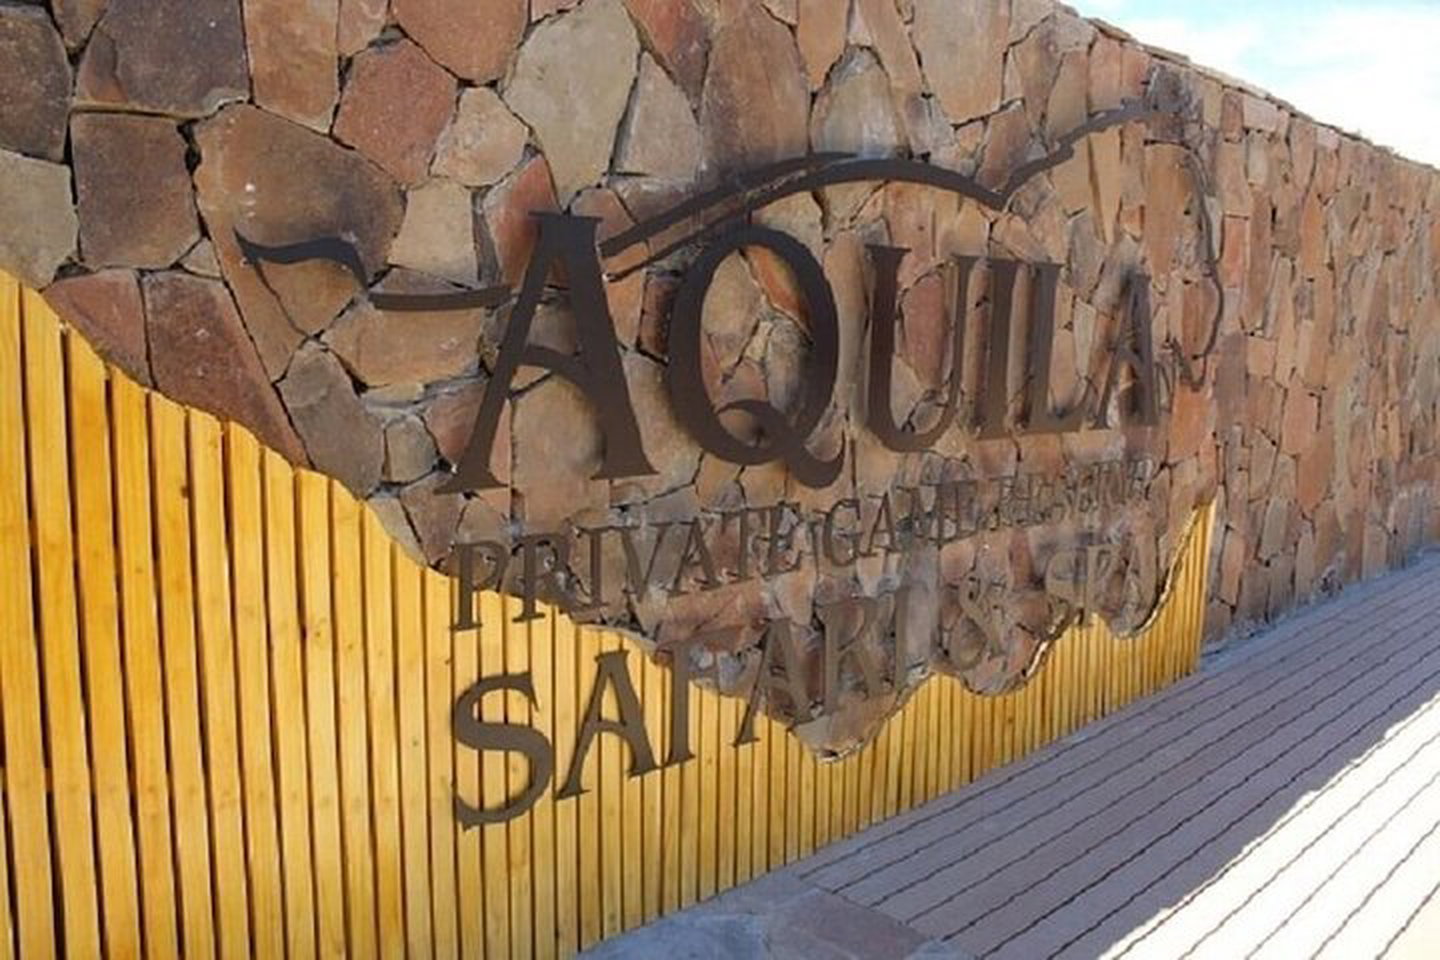 Big 5 Aquila Safari Full Day Tour With Wine Tasting - thumb 4